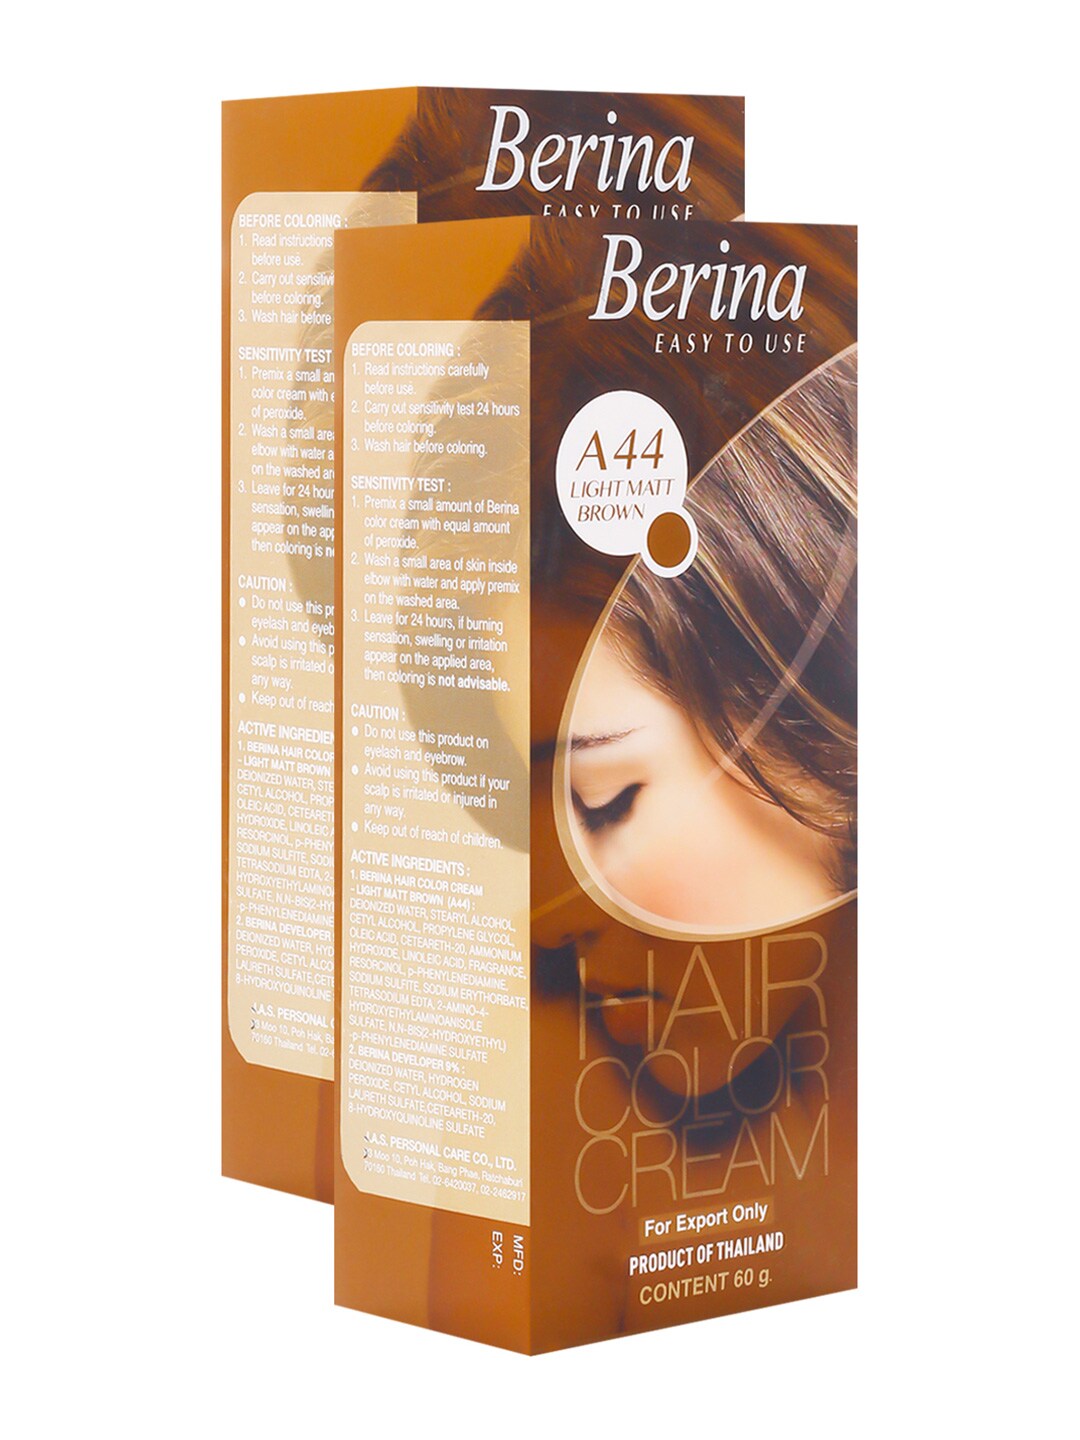 Berina Pack of 2 Hair Color Cream A44 Light Matt Brown Price in India